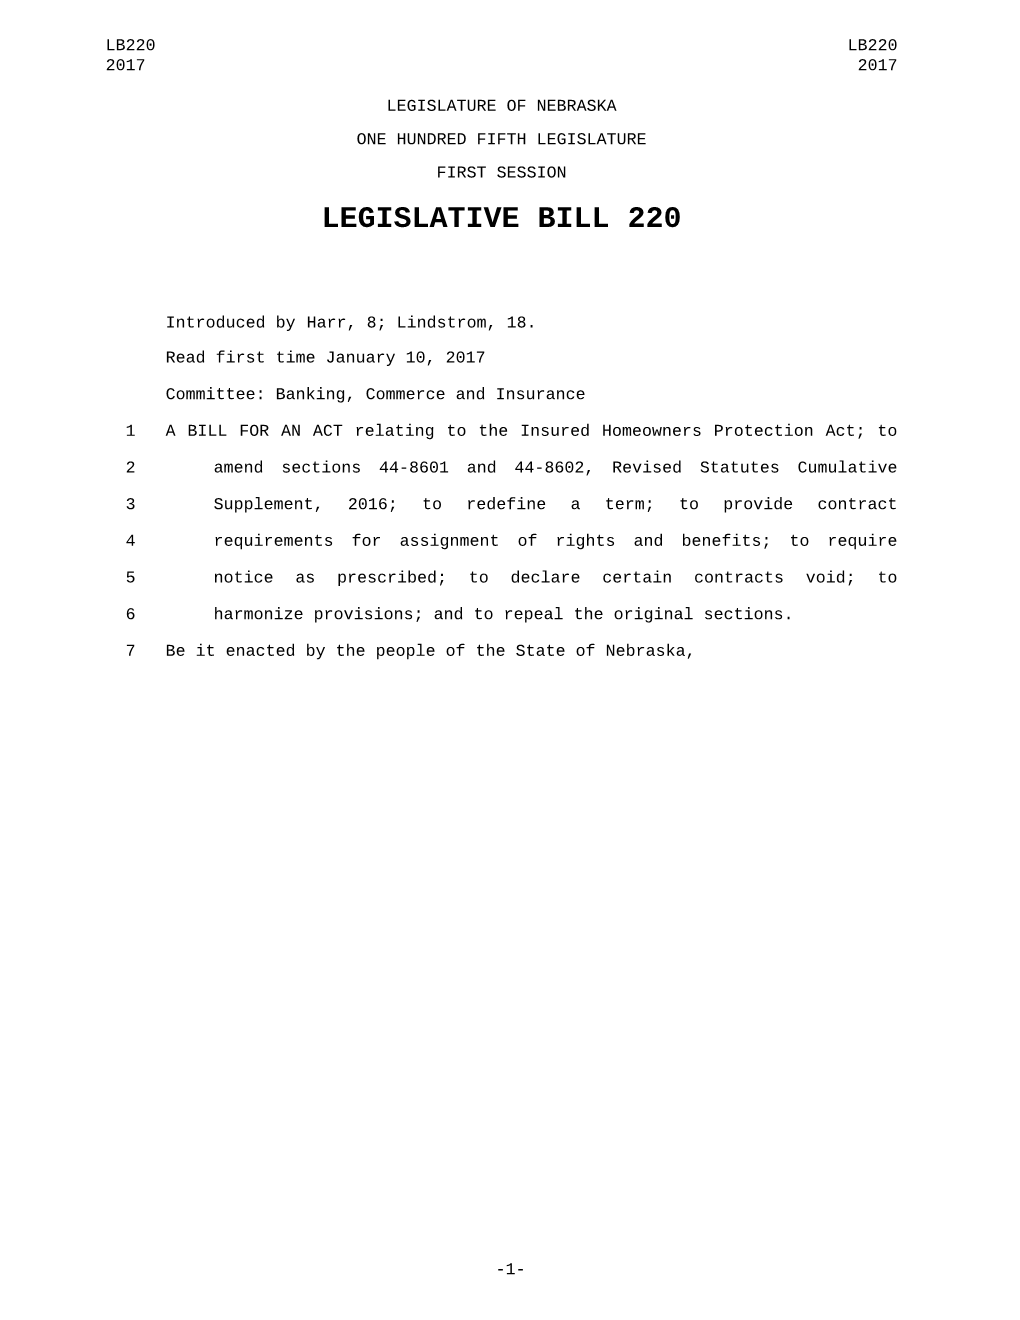 Legislative Bill 220